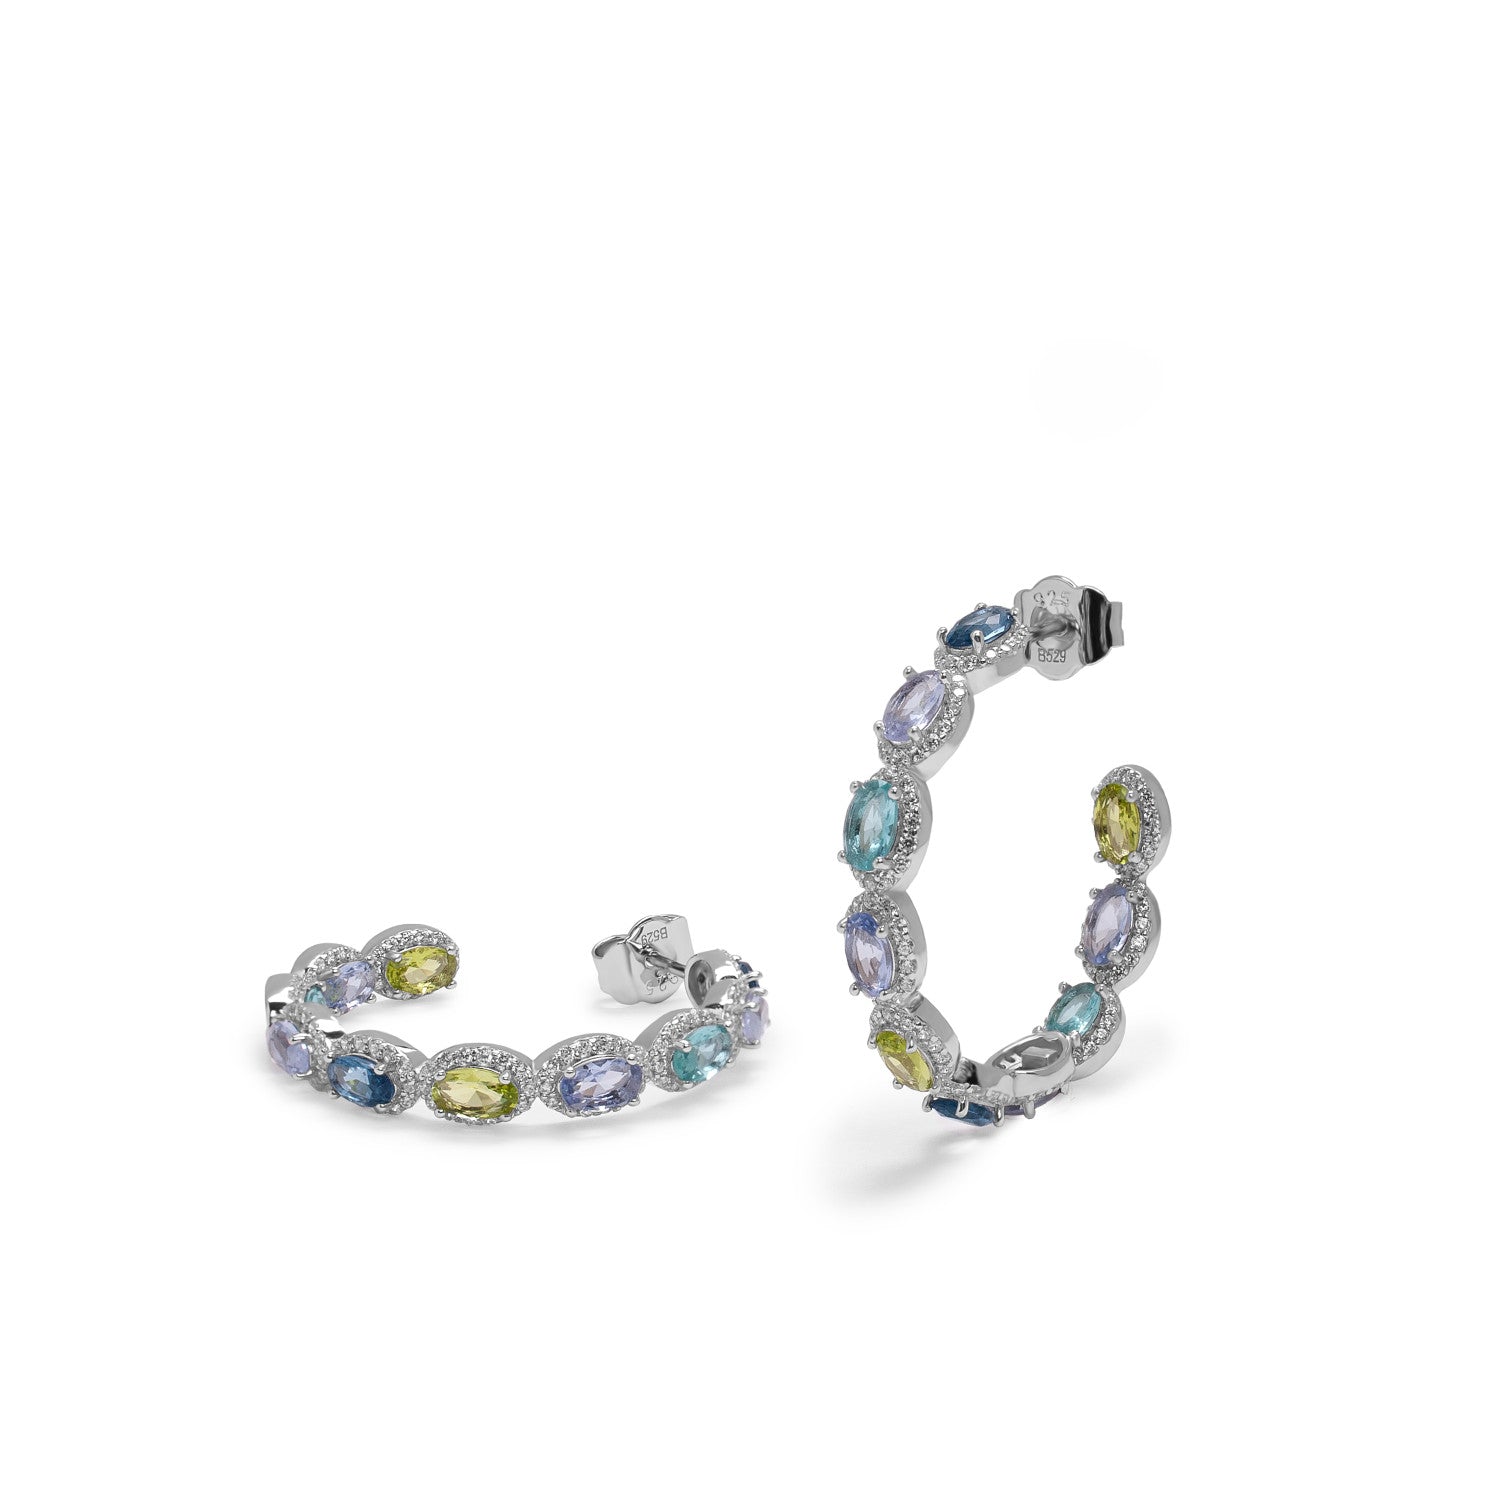 Hoop earrings with blue stones and zircons